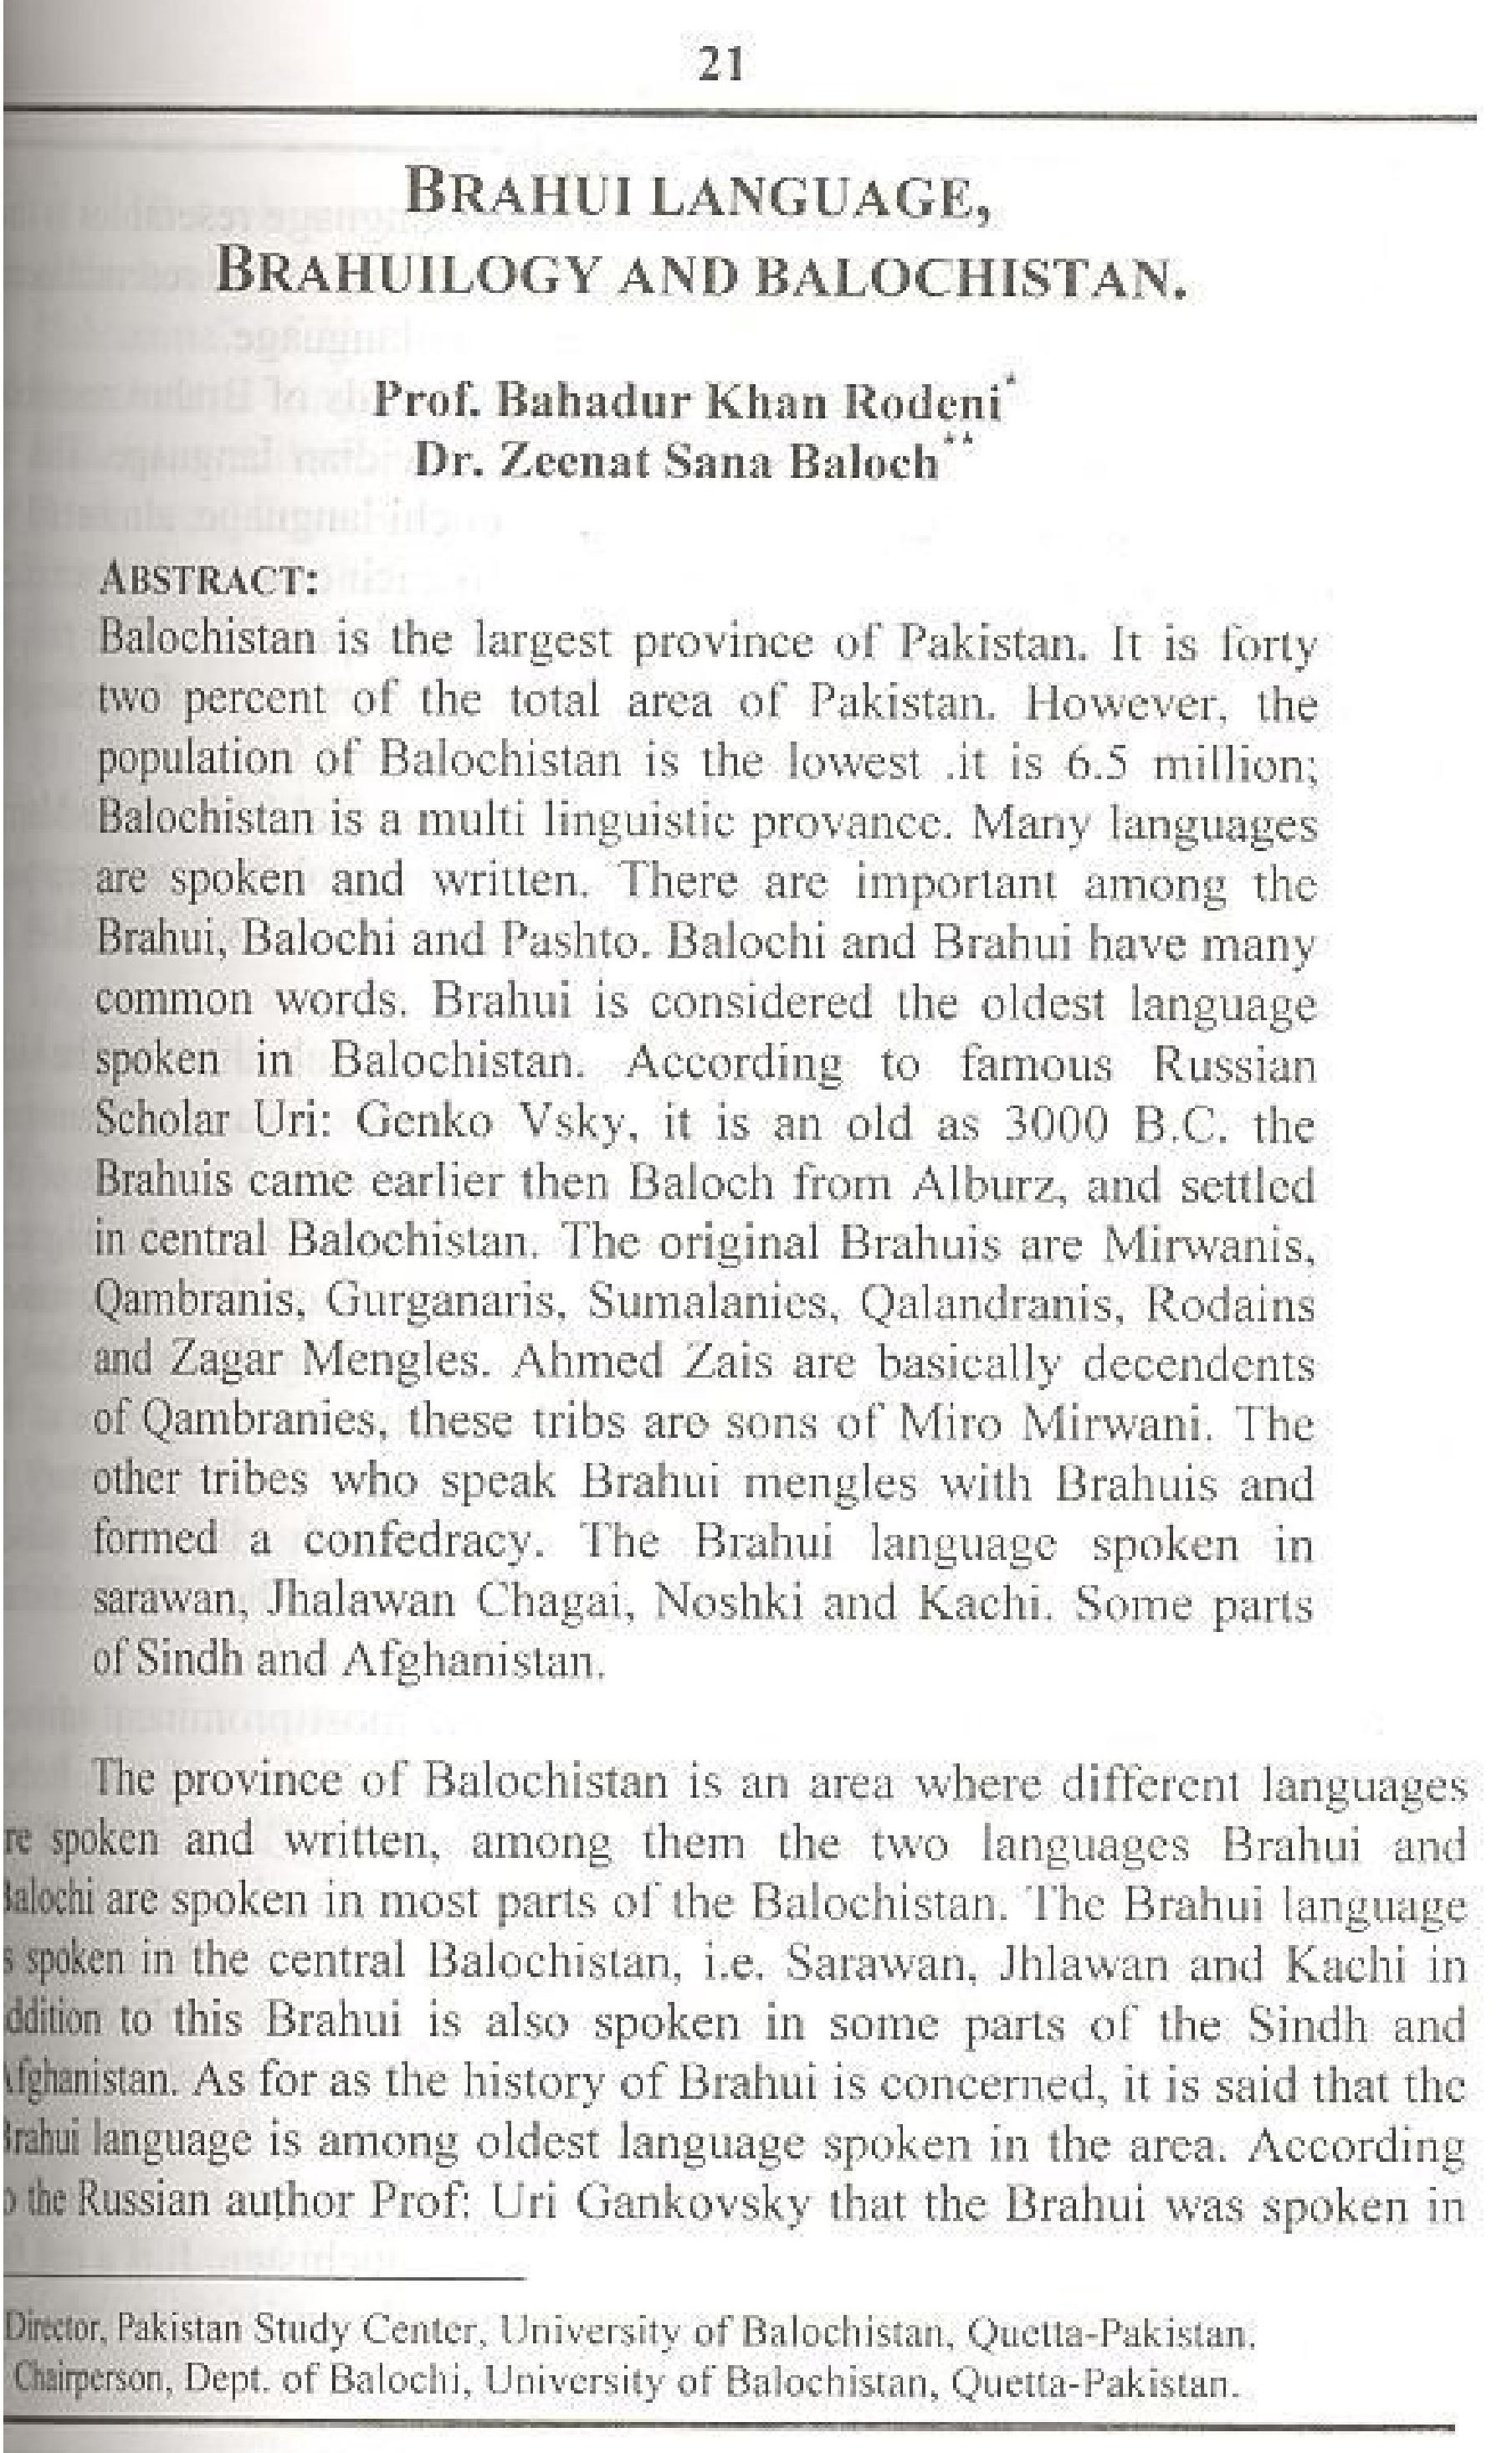 Brahui Language, Brahuilogy and Balochistan.